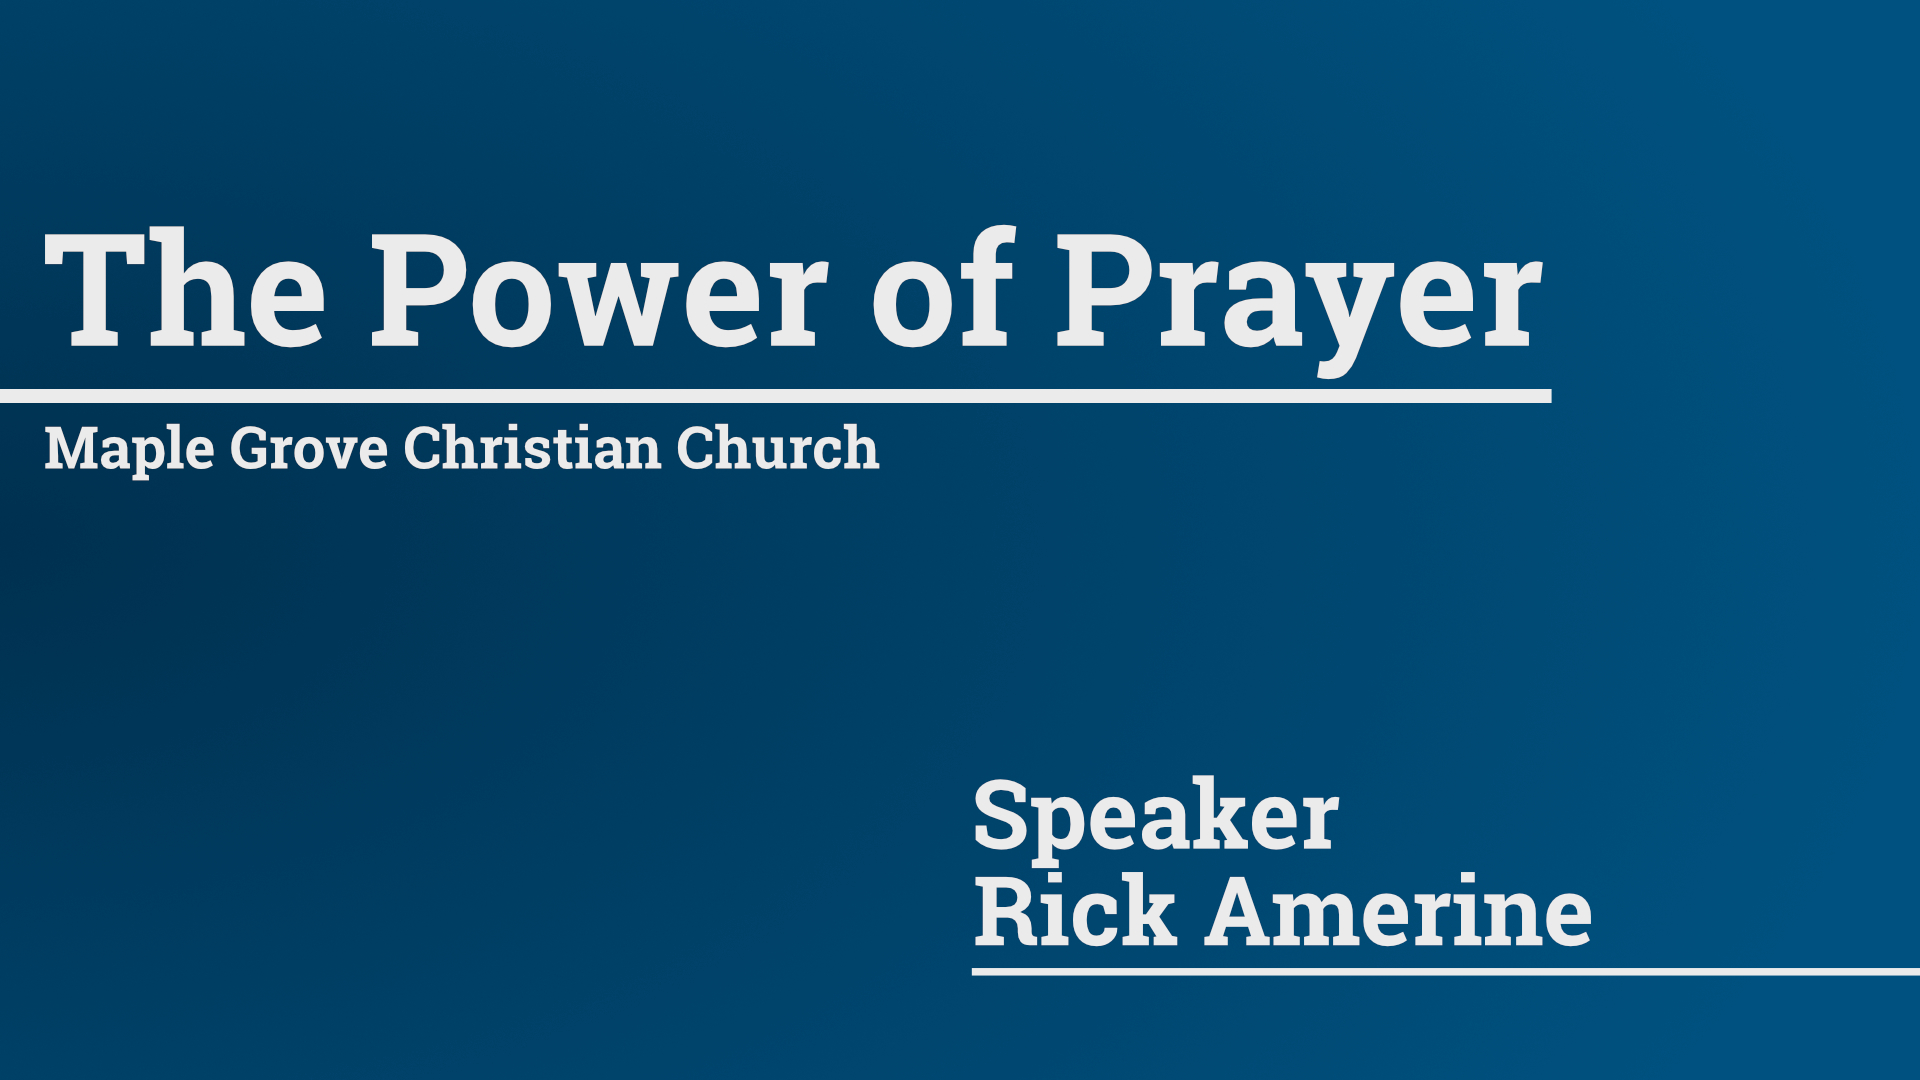 The Power of Prayer • Nov. 29, 2015